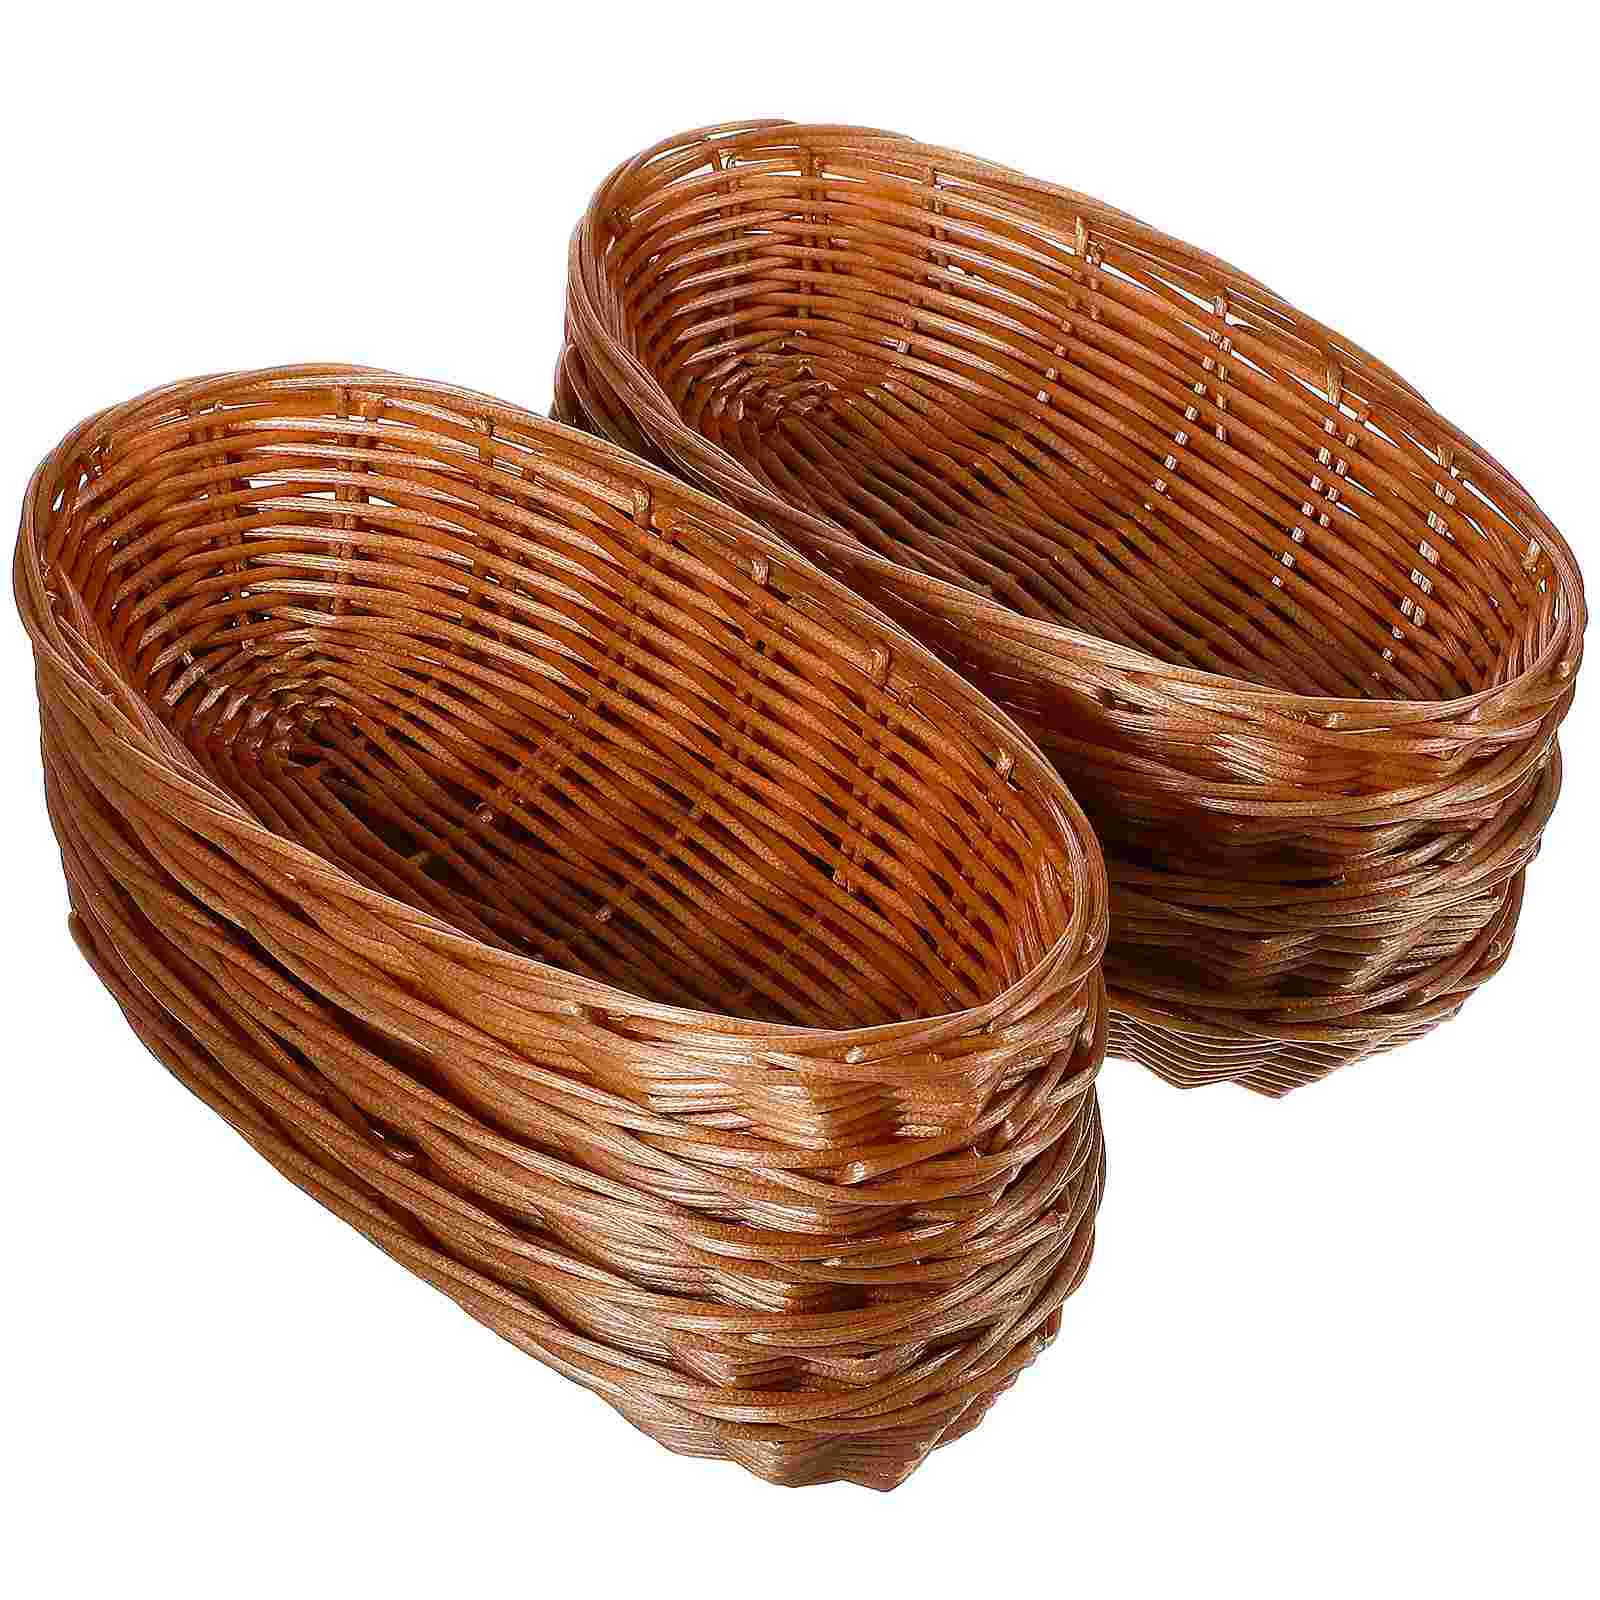 

10 Pcs Bread Bowl Fruit Basket Baskets Proofing Counter Plastic Rattan Bowls Serving Weave Snacks